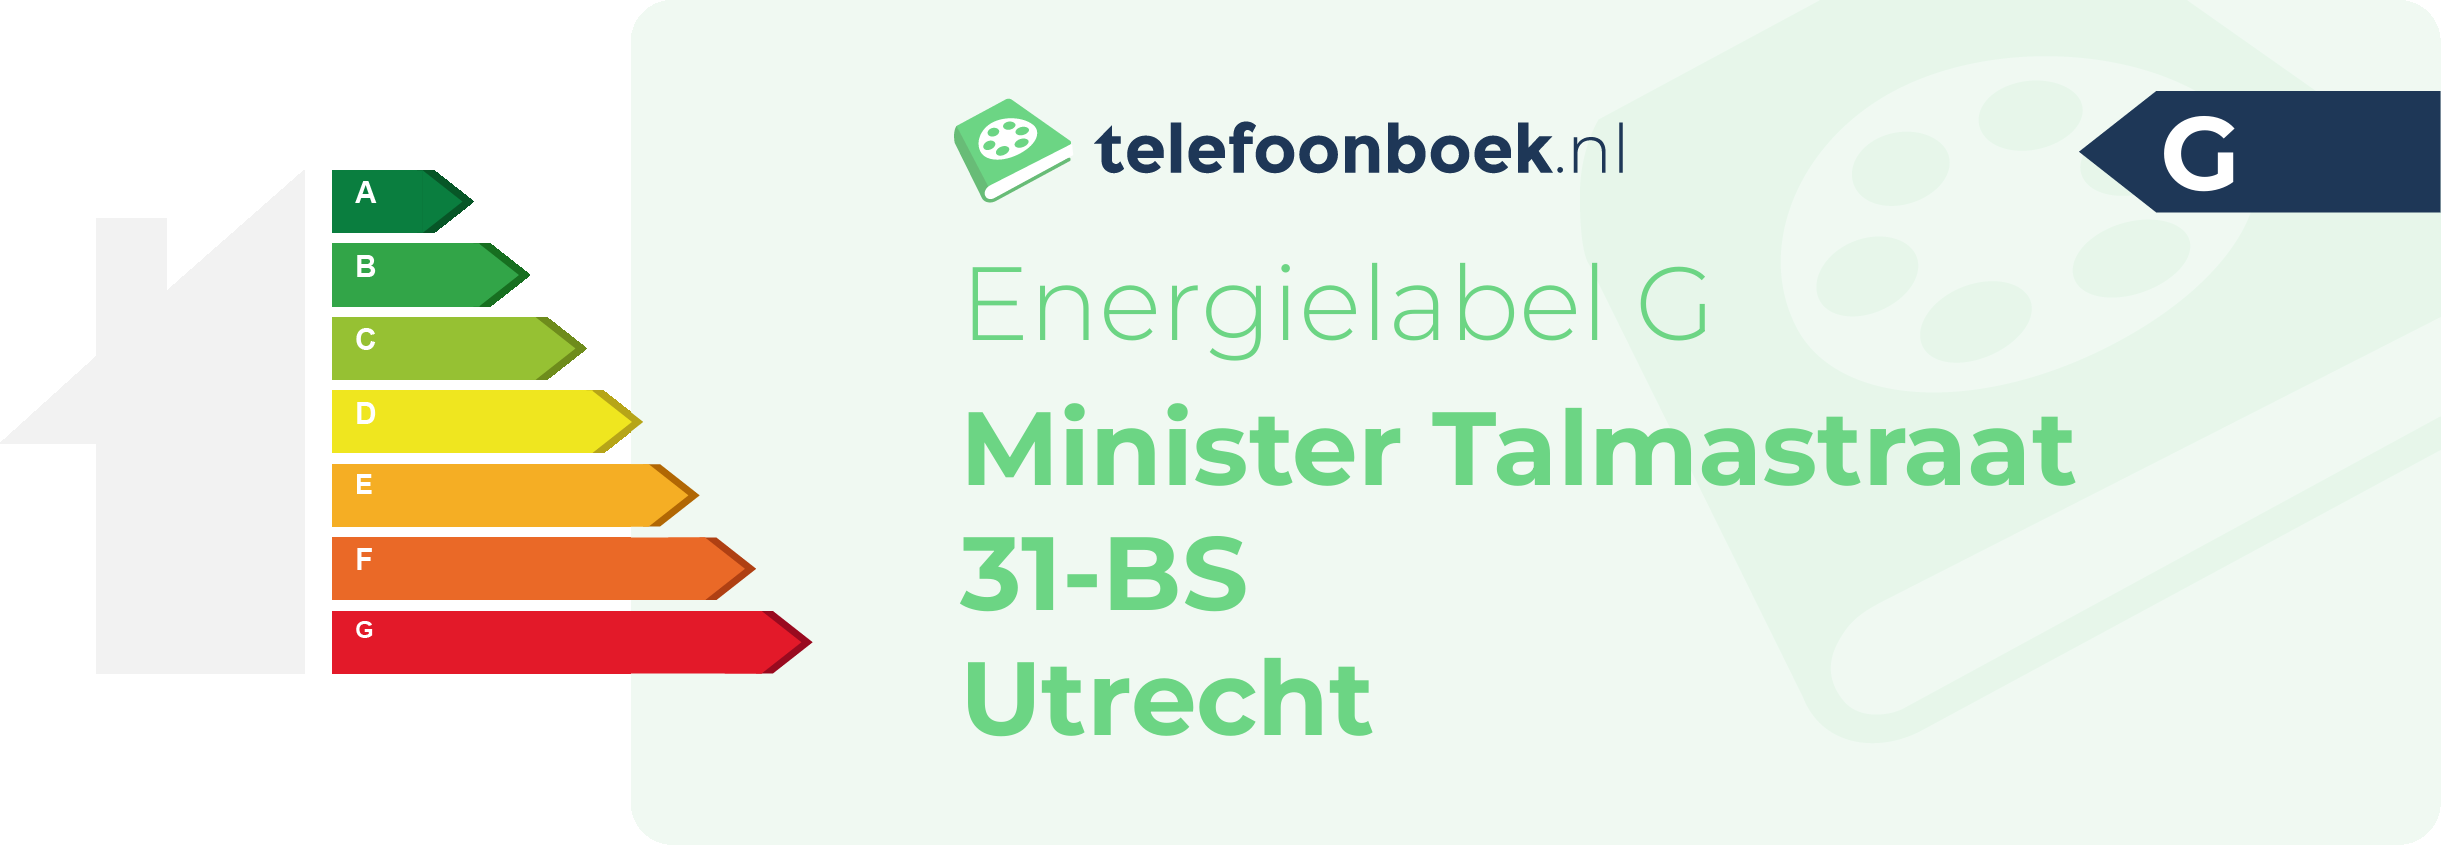 Energielabel Minister Talmastraat 31-BS Utrecht